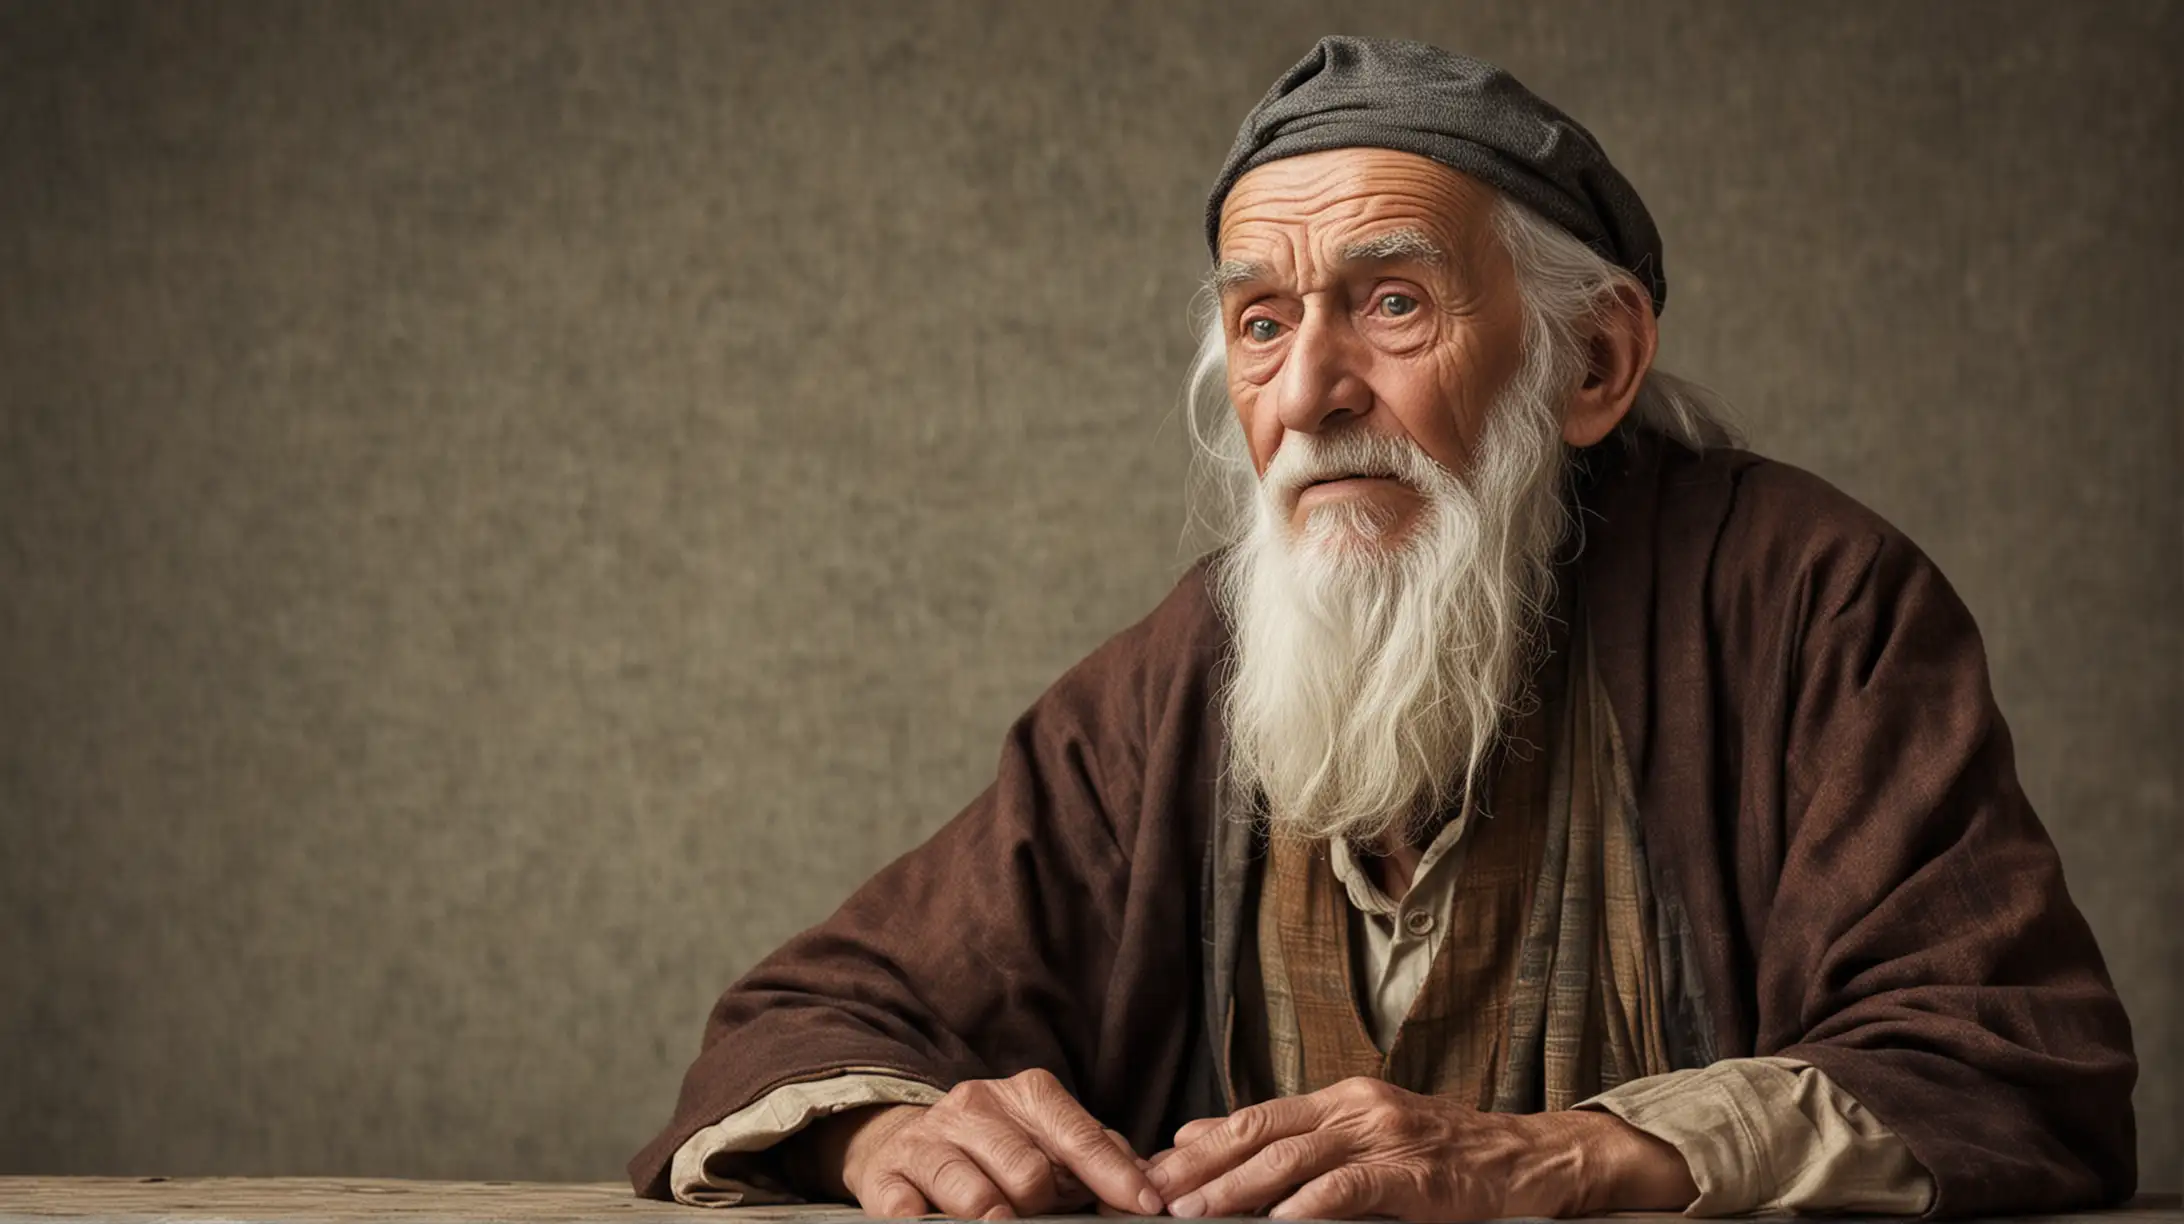 Elderly Sage Sharing Wisdom Through Storytelling